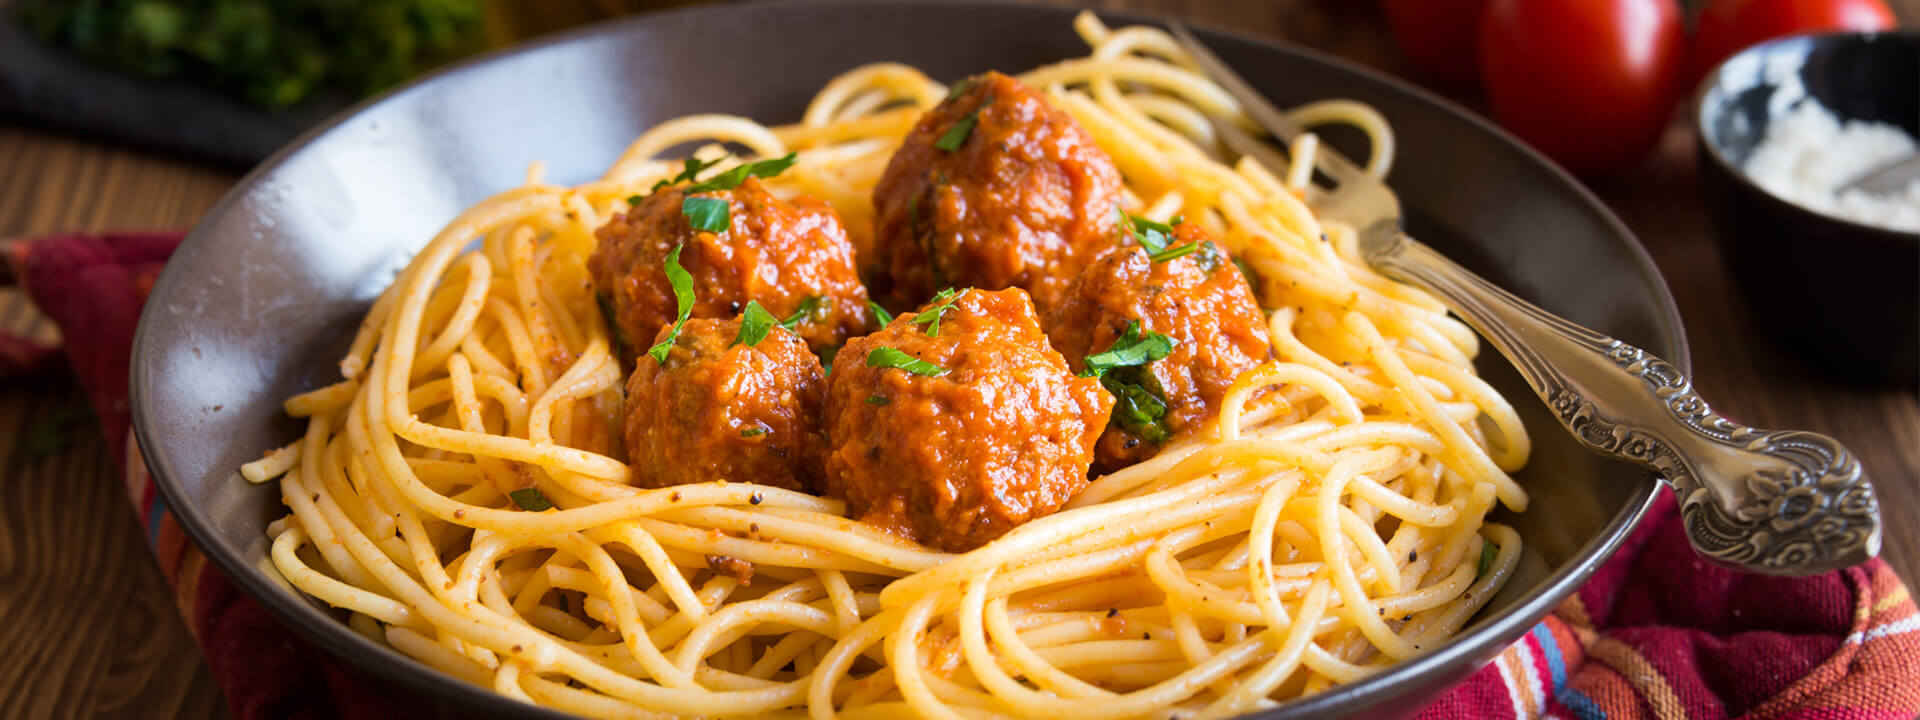 https://legador.com/spaghetti-meat-balls